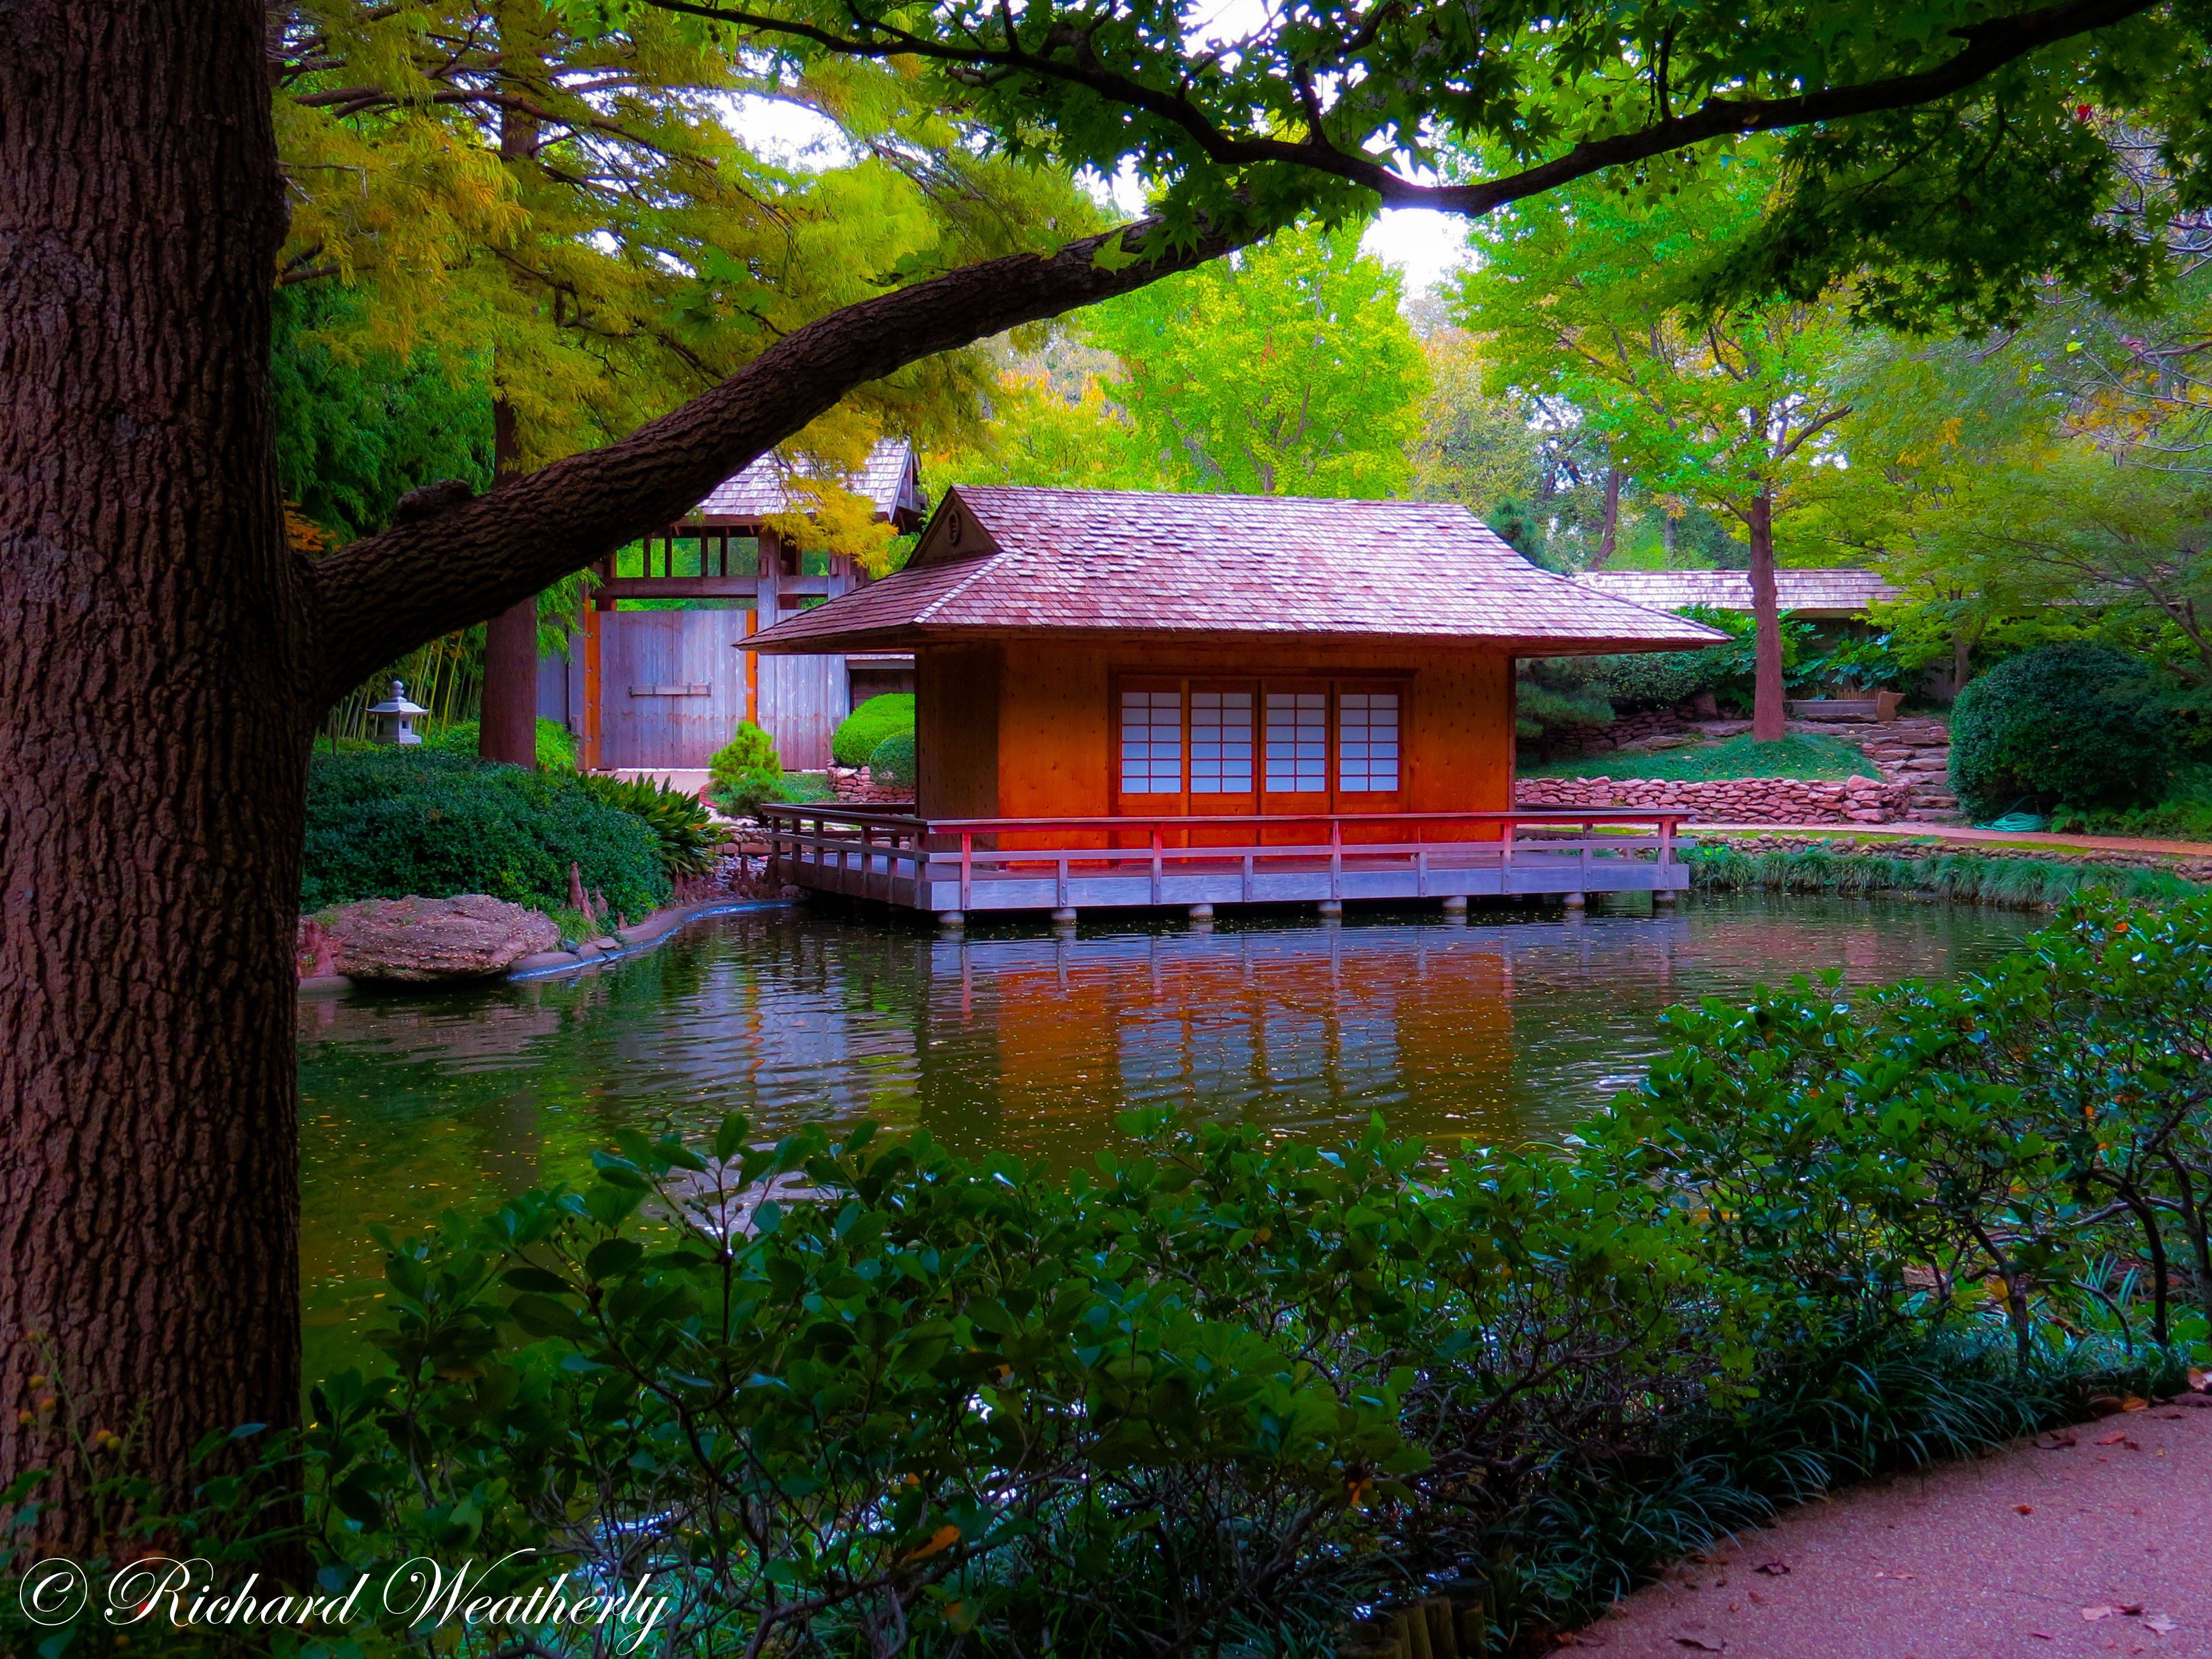 Japanese Gardens Fort Worth